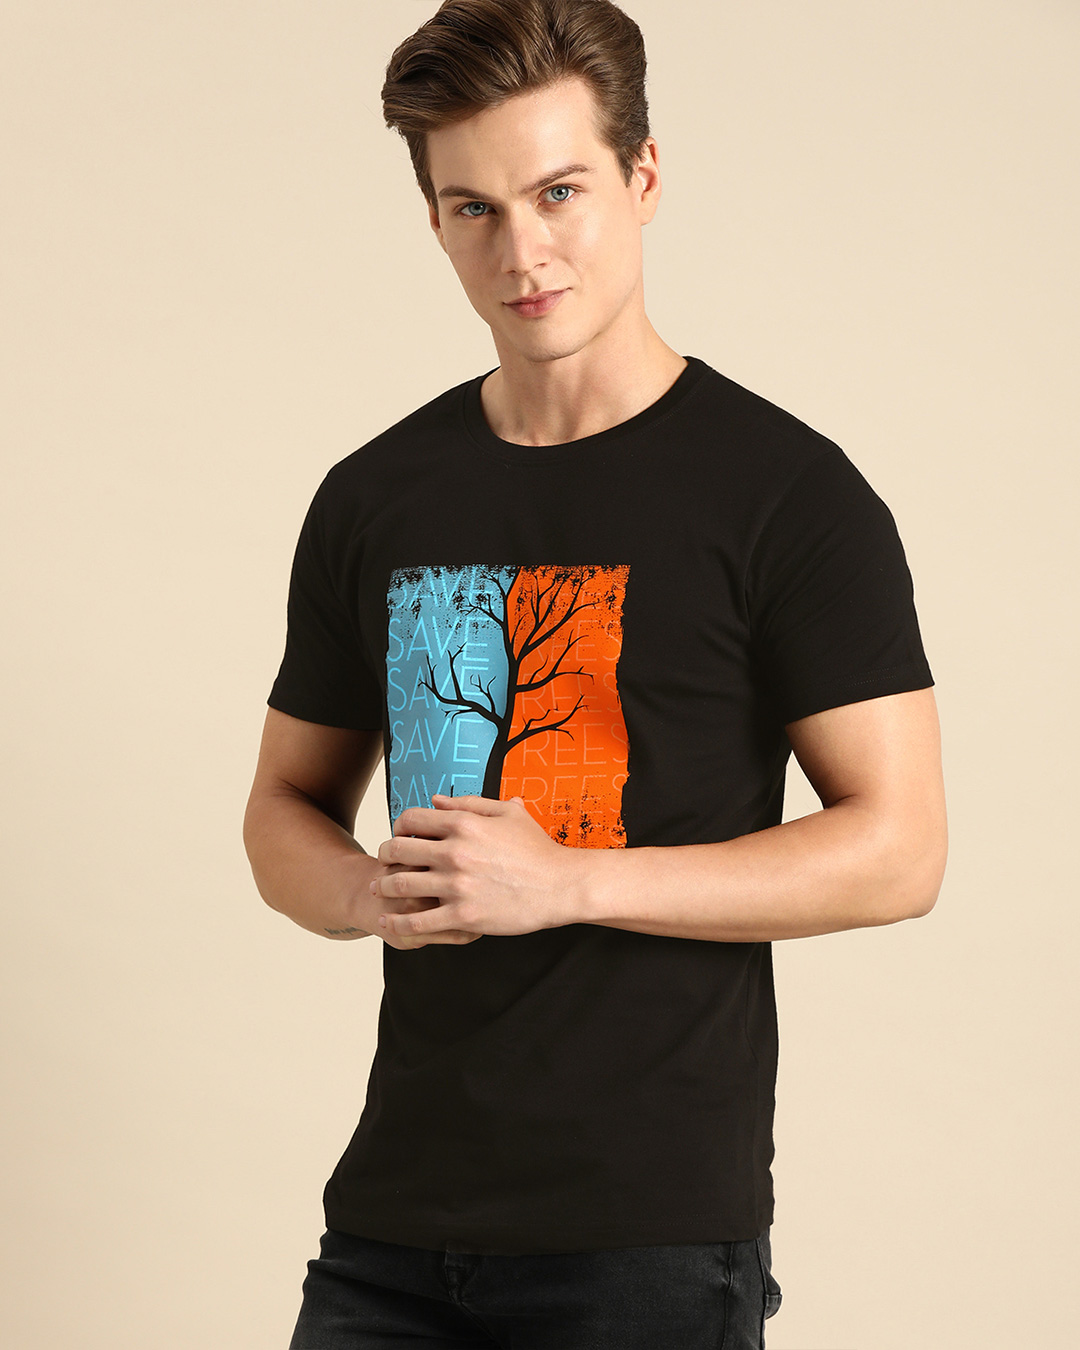 Shop Men's Black Save Trees Graphic Printed T-shirt-Back